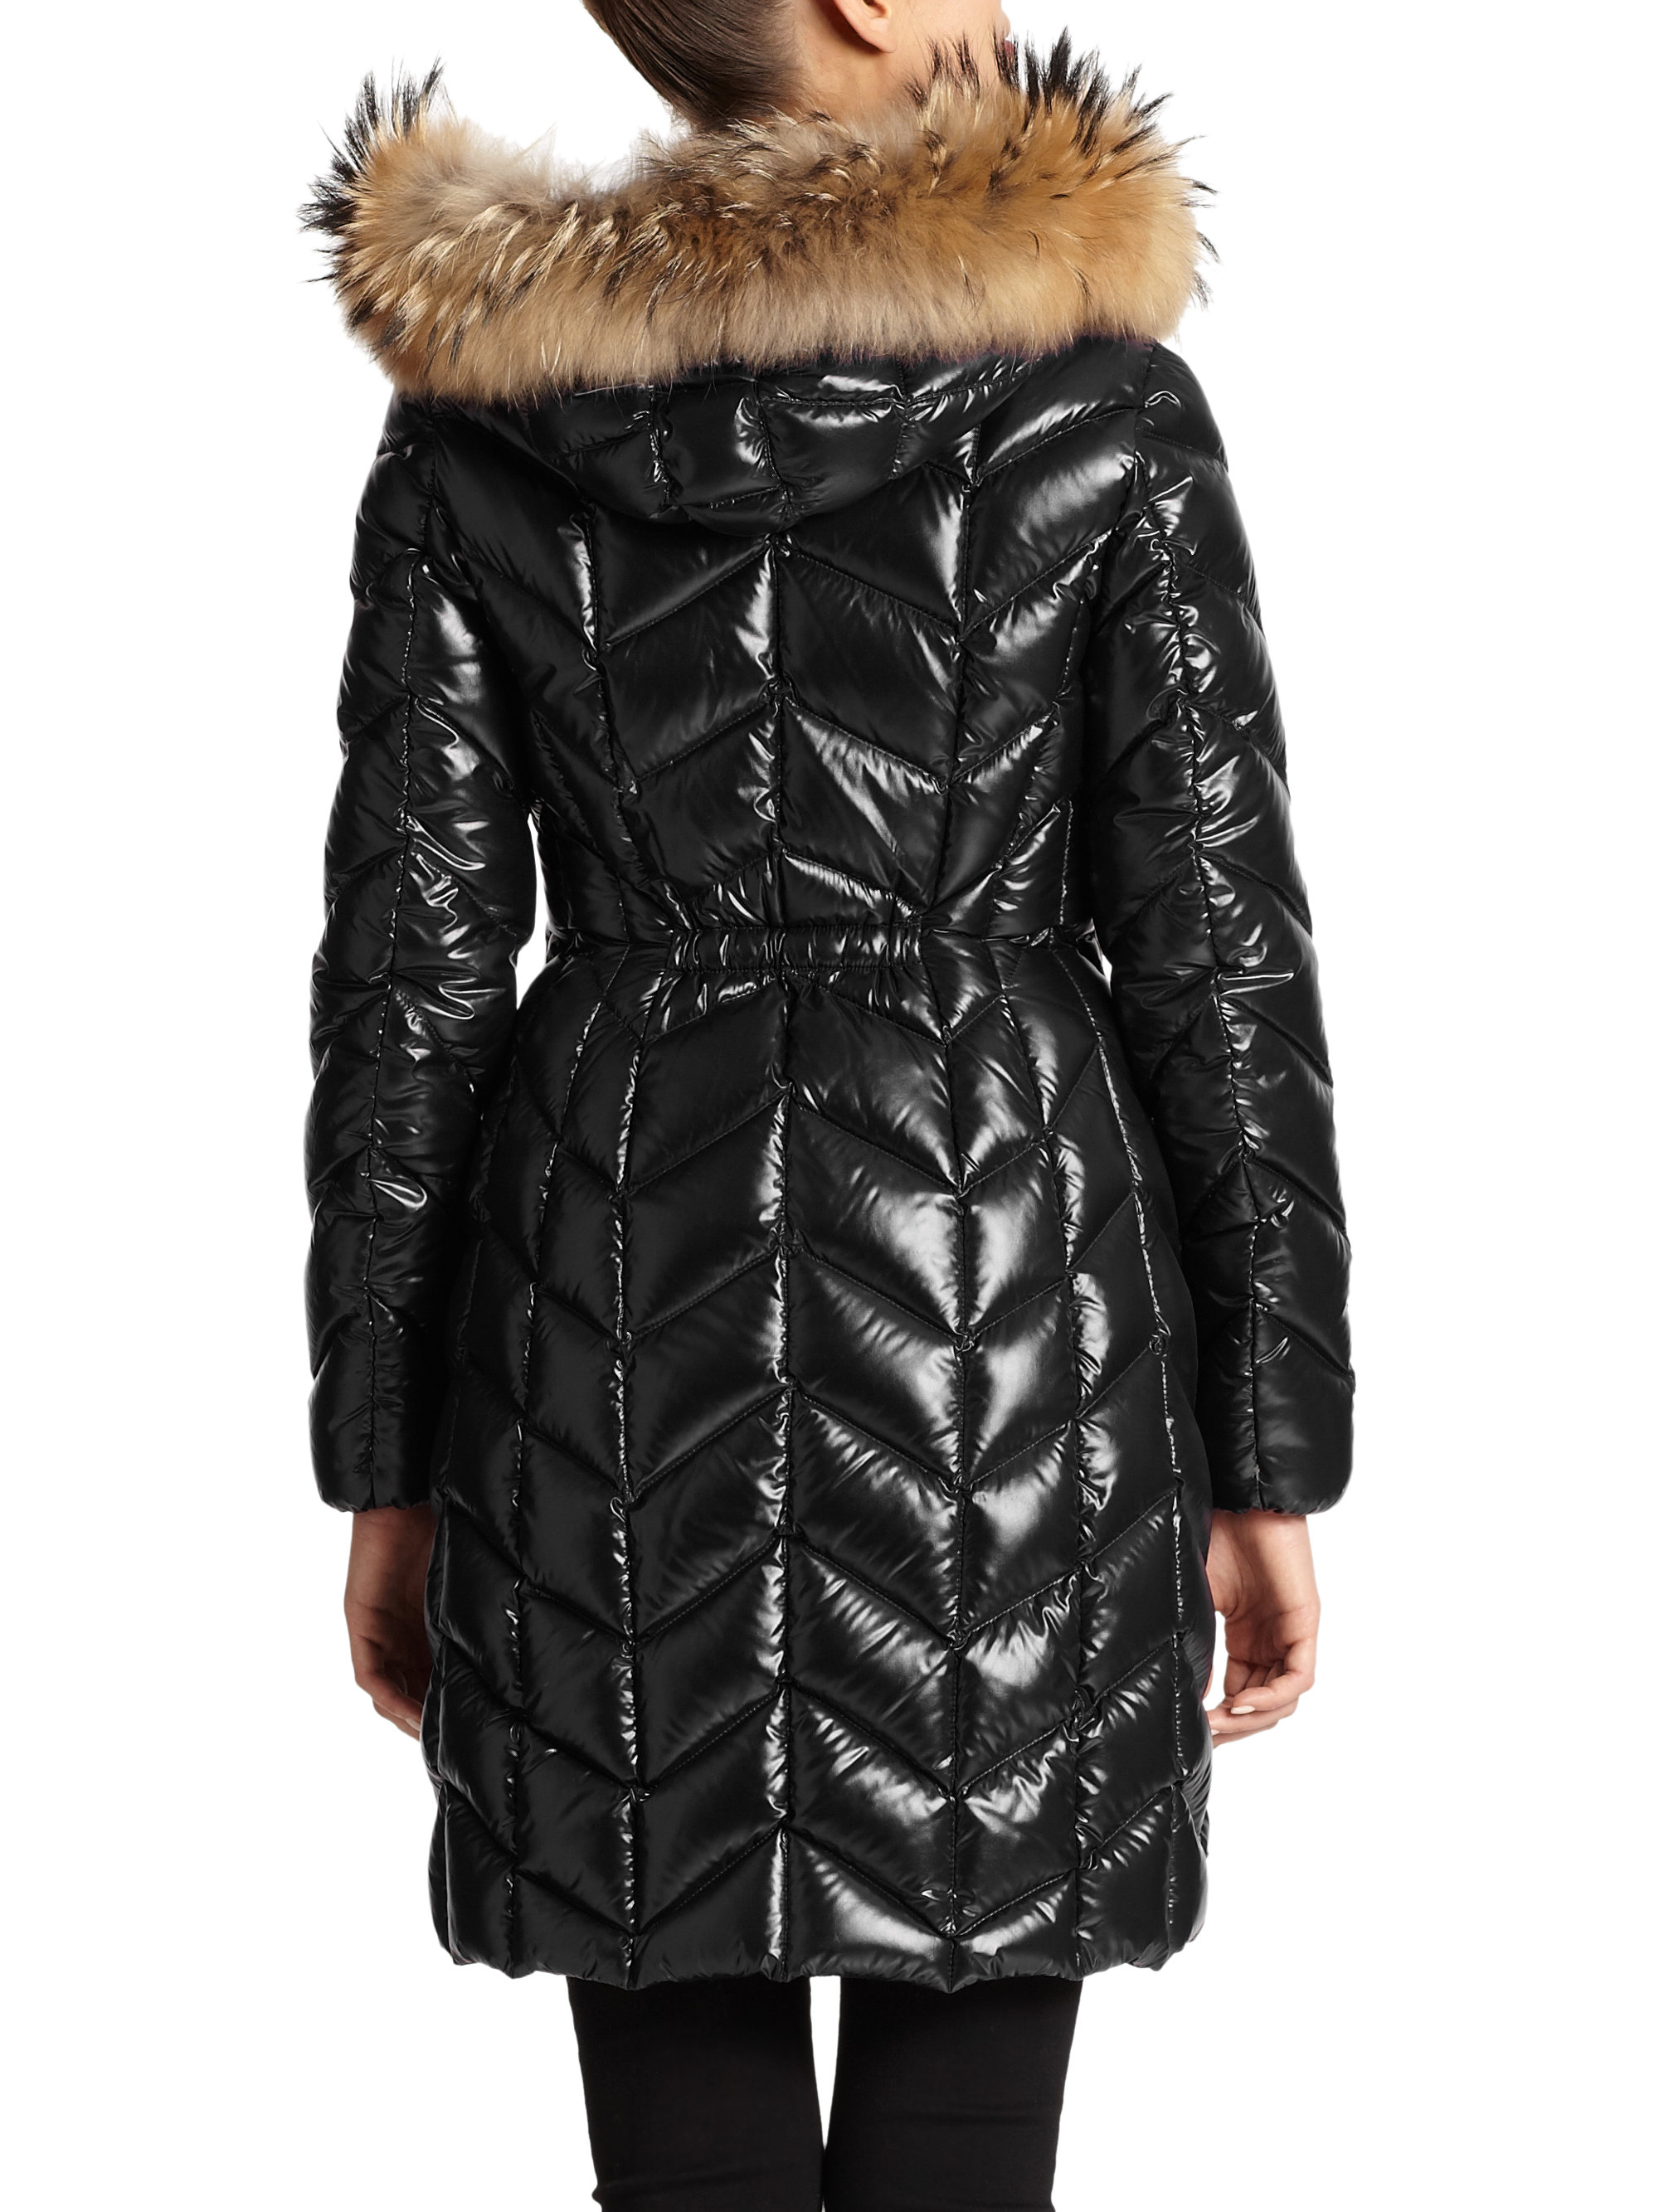 Moncler Belloy Fur-Trim Jacket in Black - Lyst